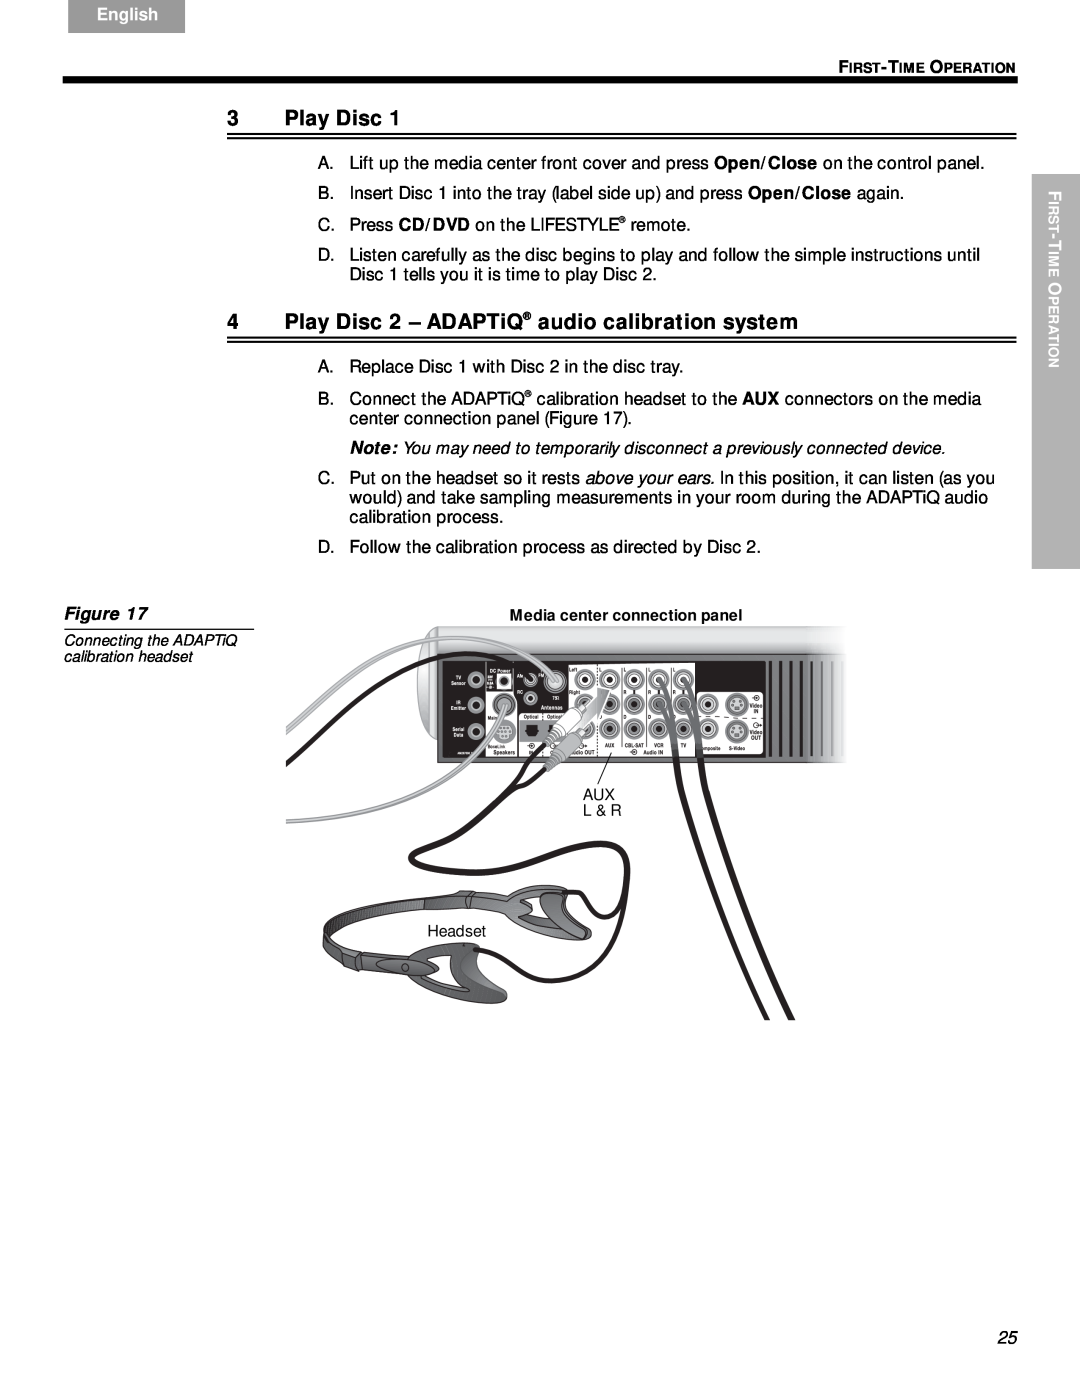 Bose VS-2 manual 3Play Disc, 4Play Disc 2 – ADAPTiQ audio calibration system, English, Nederlands, Svenska, Figure 